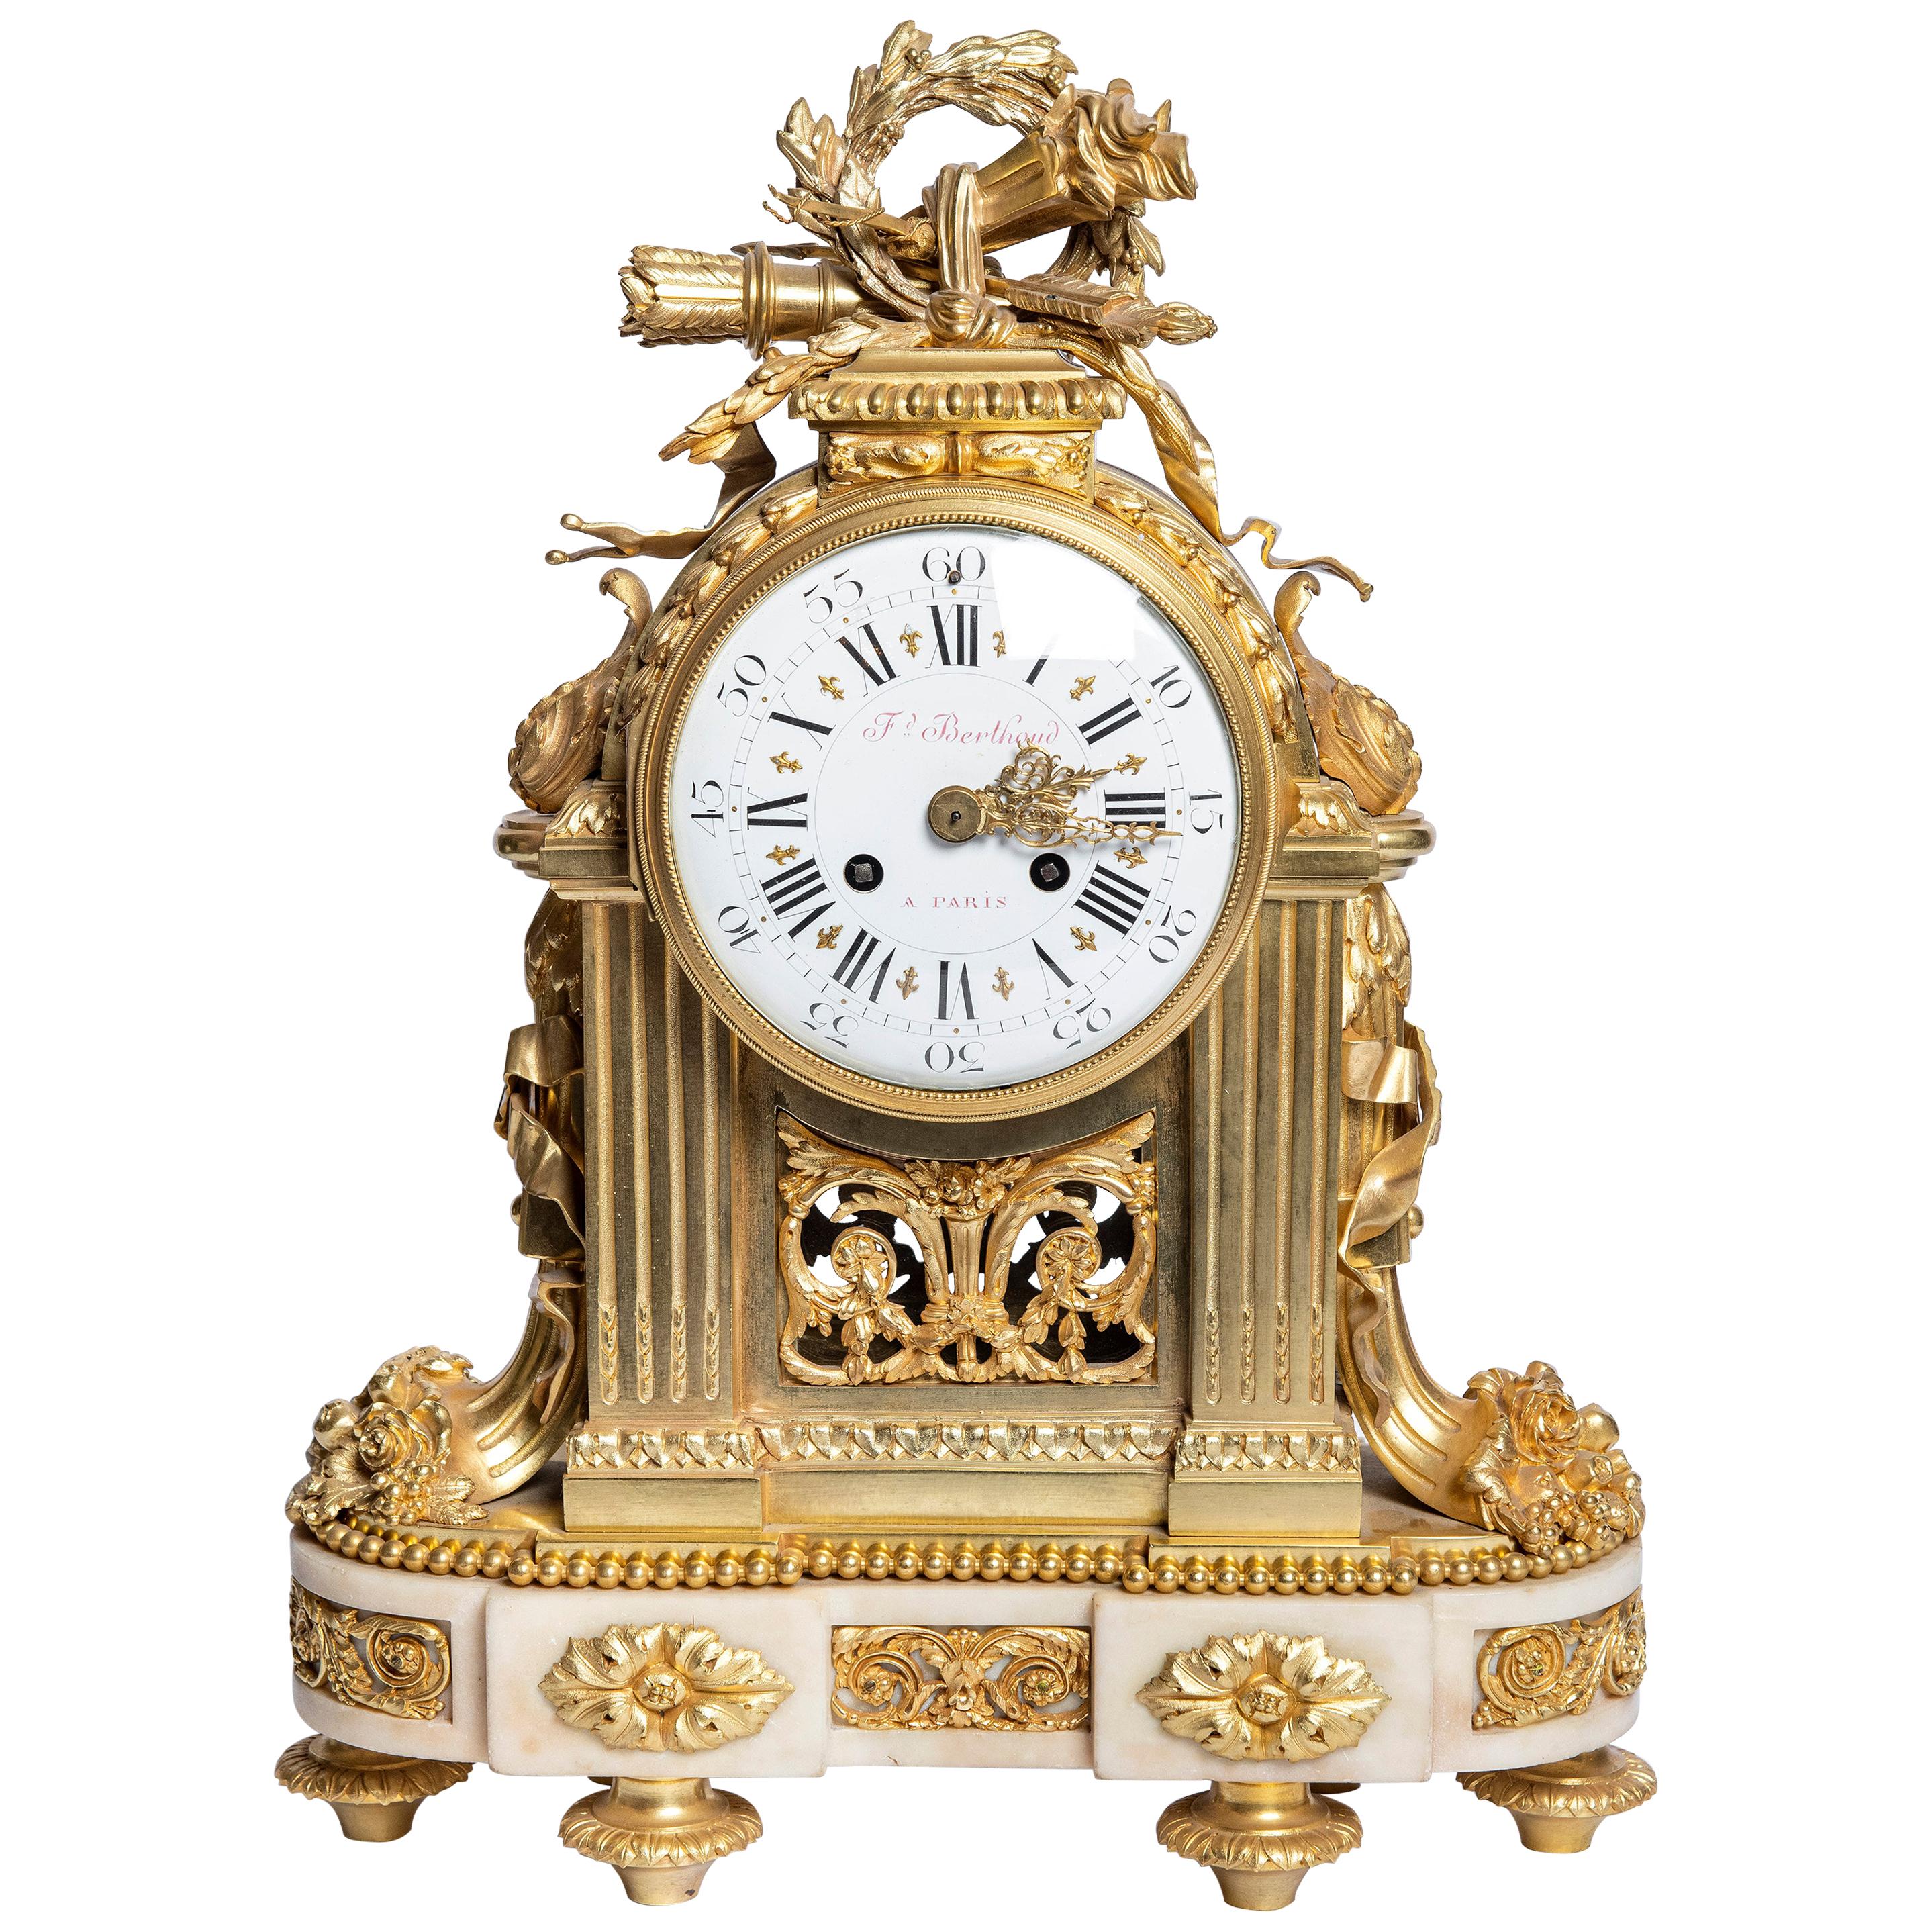 Gilt Bronze and Marble Mantel Clock, Signed F. Berthoud, Paris